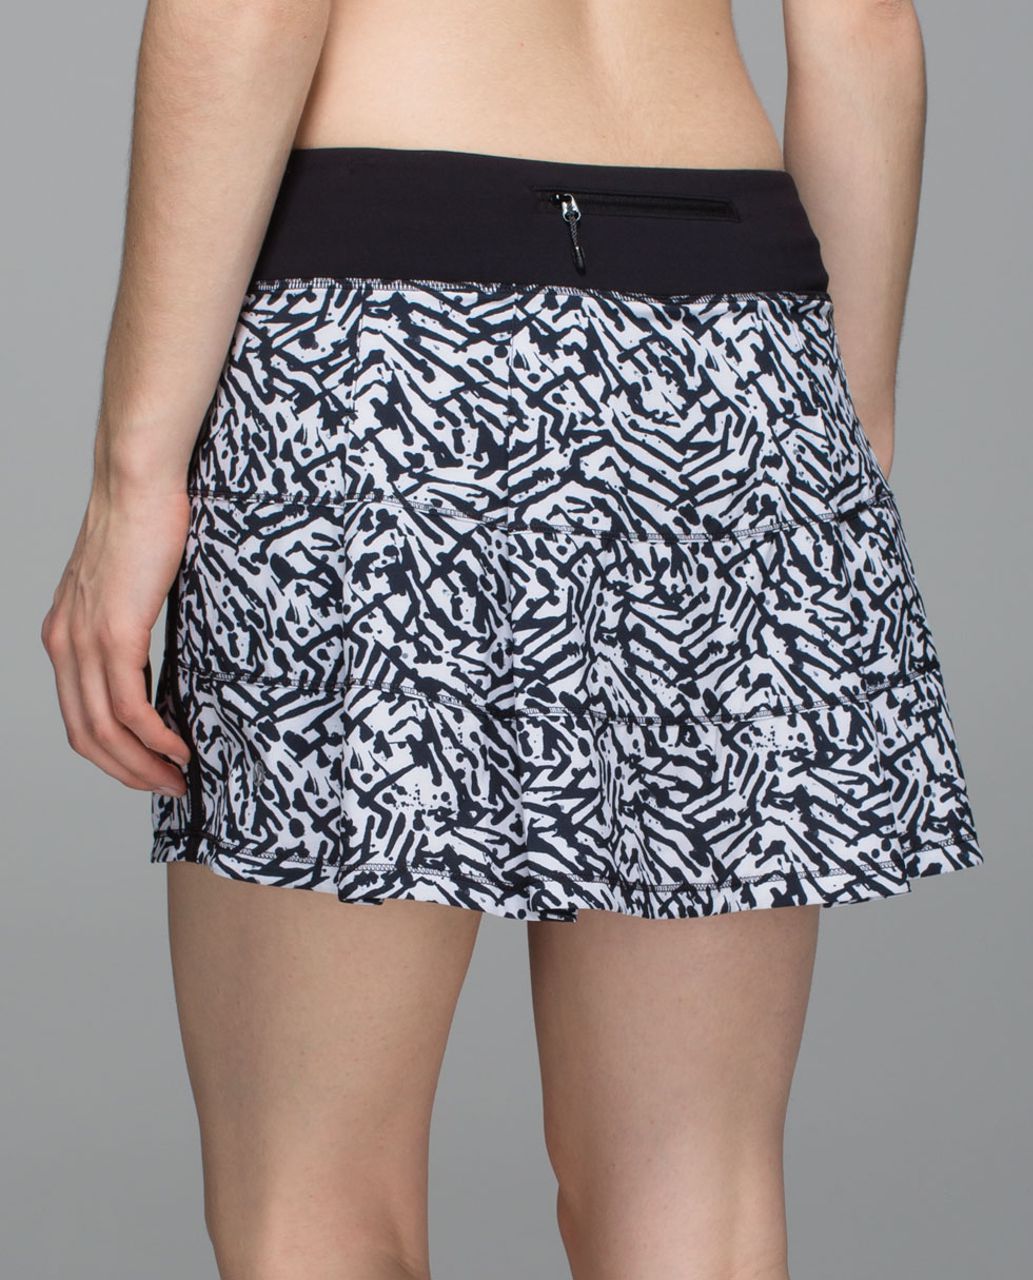 Lululemon Pace Rival Skirt II *4-way Stretch (Tall) - Brushed Animal White Black / Black